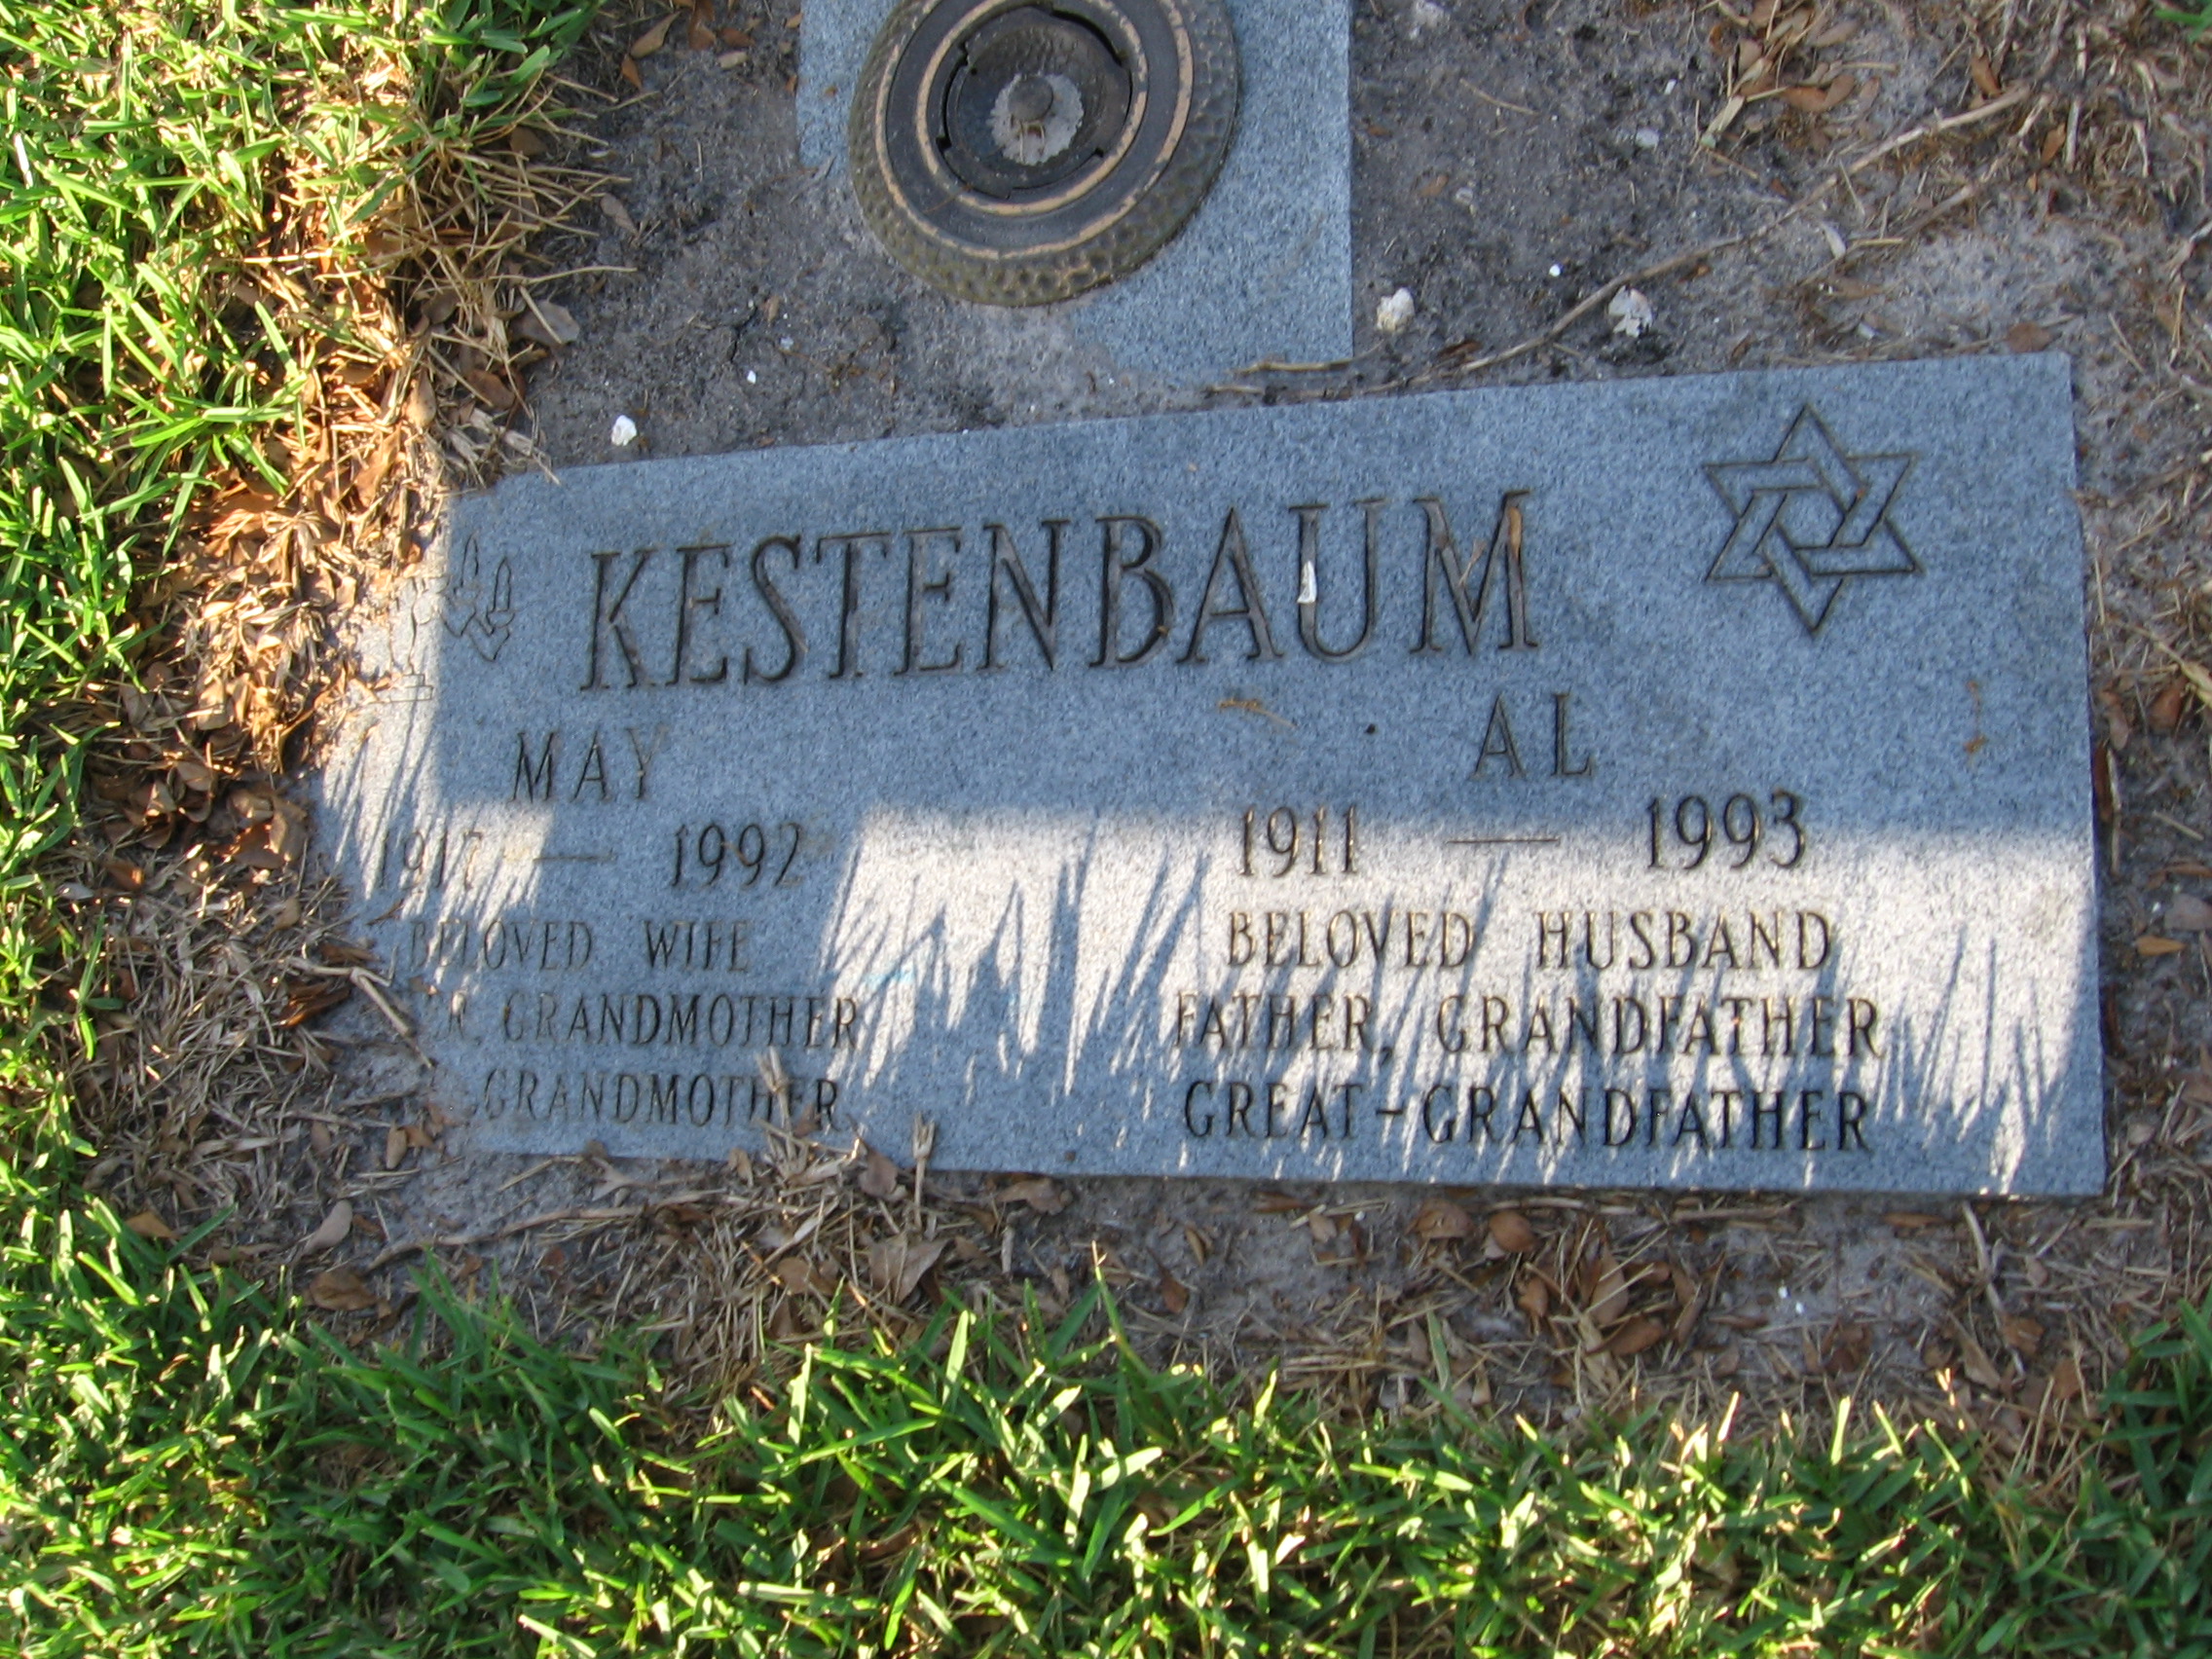 Al Kestenbaum